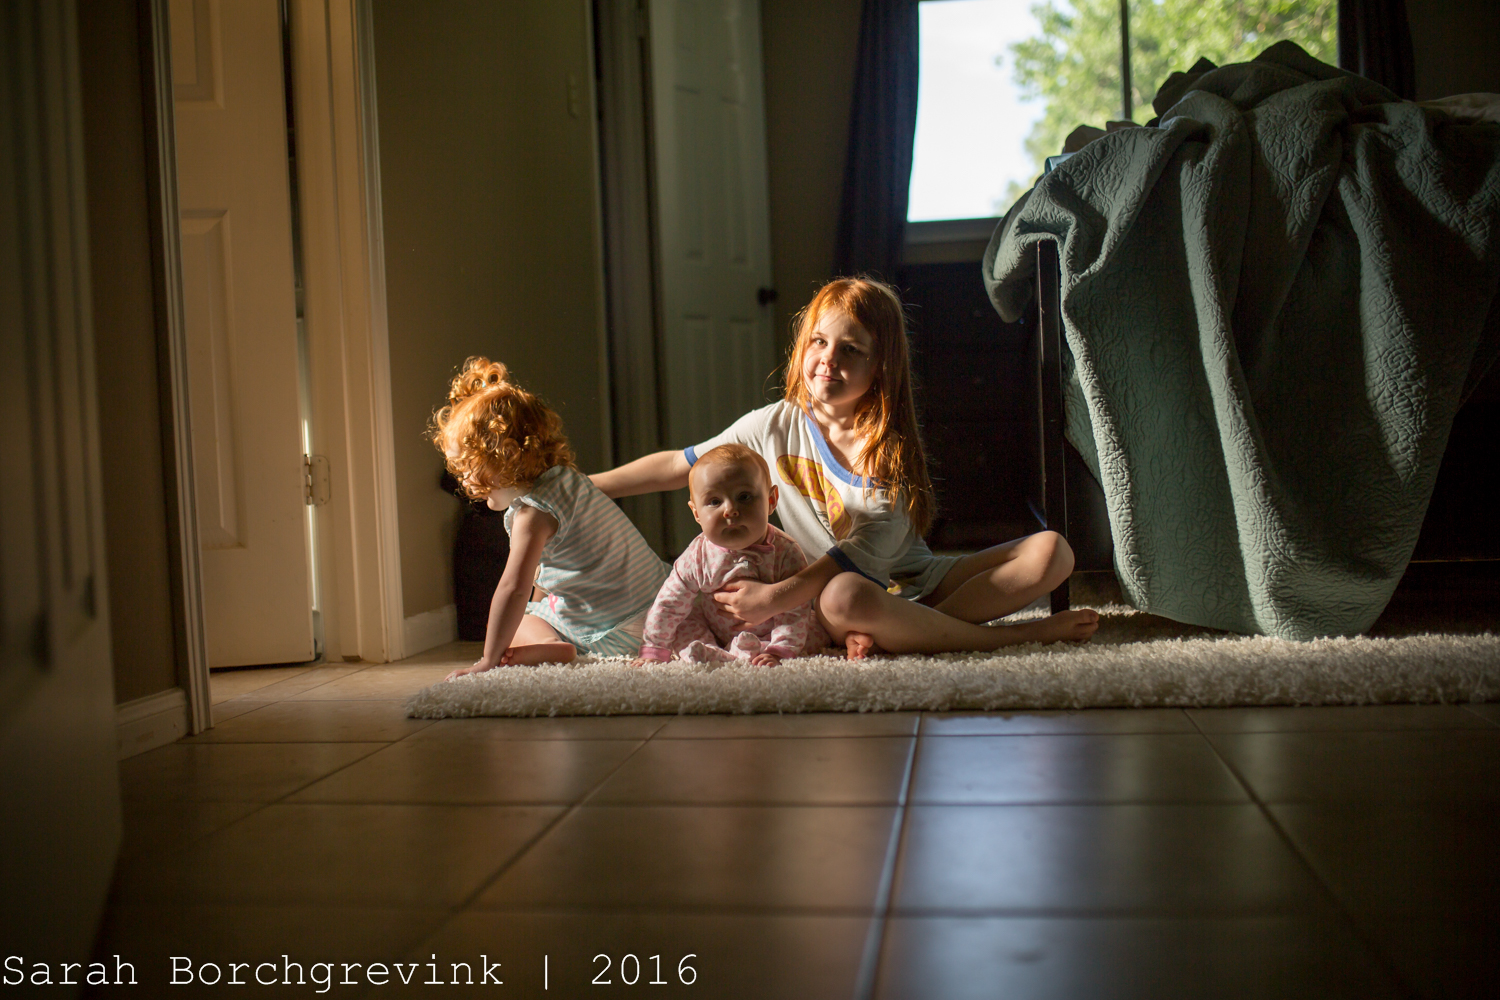 Houston Child and Family Photographer - Lifestyle Photography (3 of 3).JPG